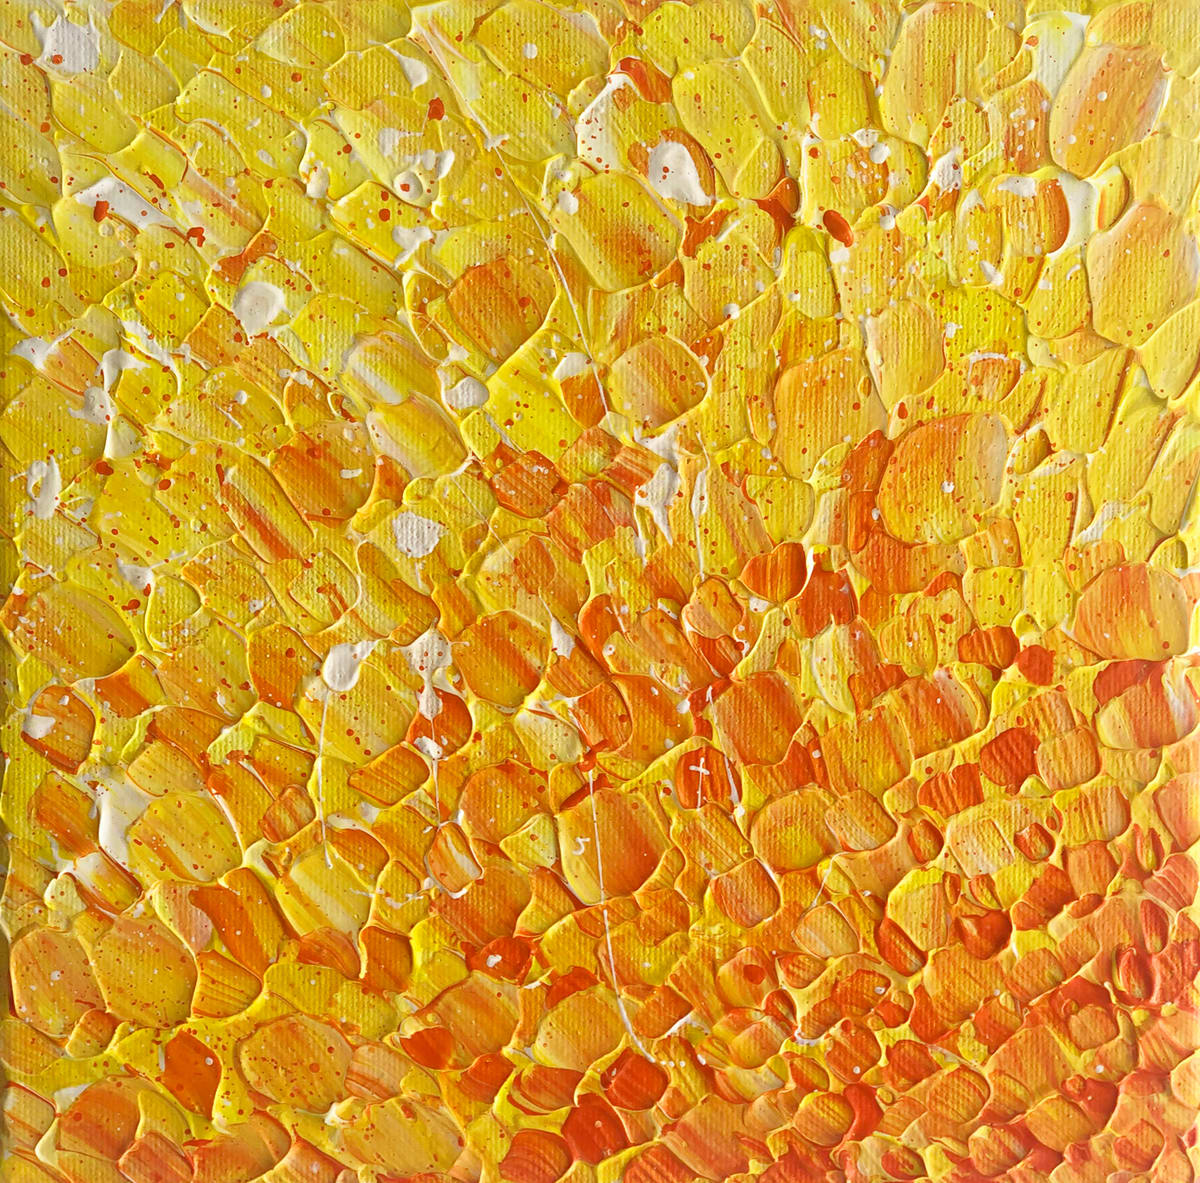 In the Heart of the Sun by Bridget Bradley  Image: In the Heart of the Sun - Abstract Expressionism Painting ©Bridget Bradley